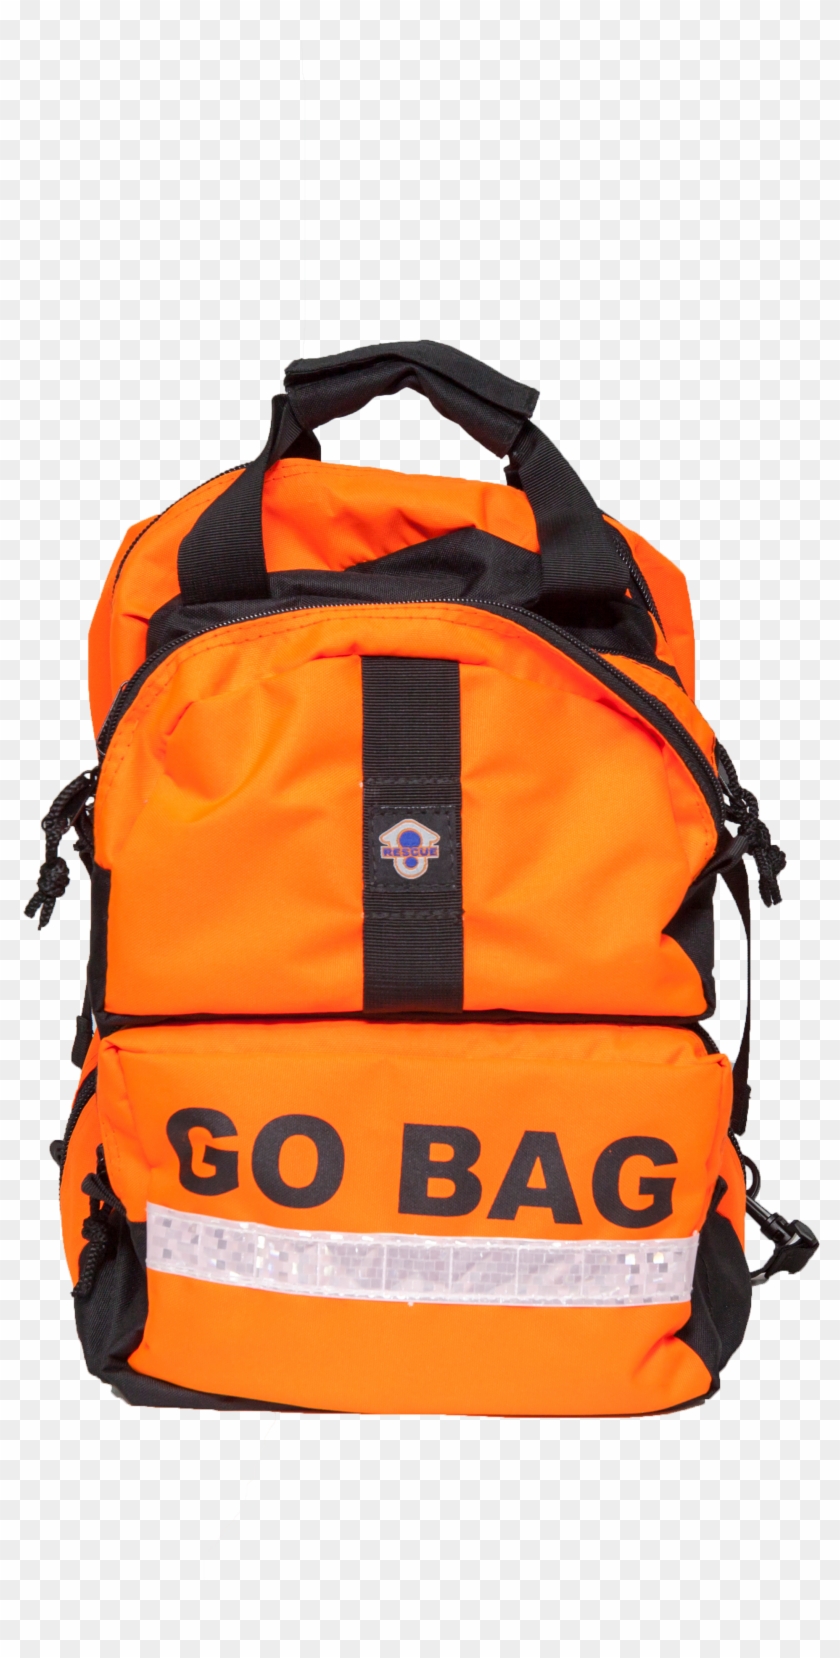 Survival Go Bag - Bag Clipart #2818246